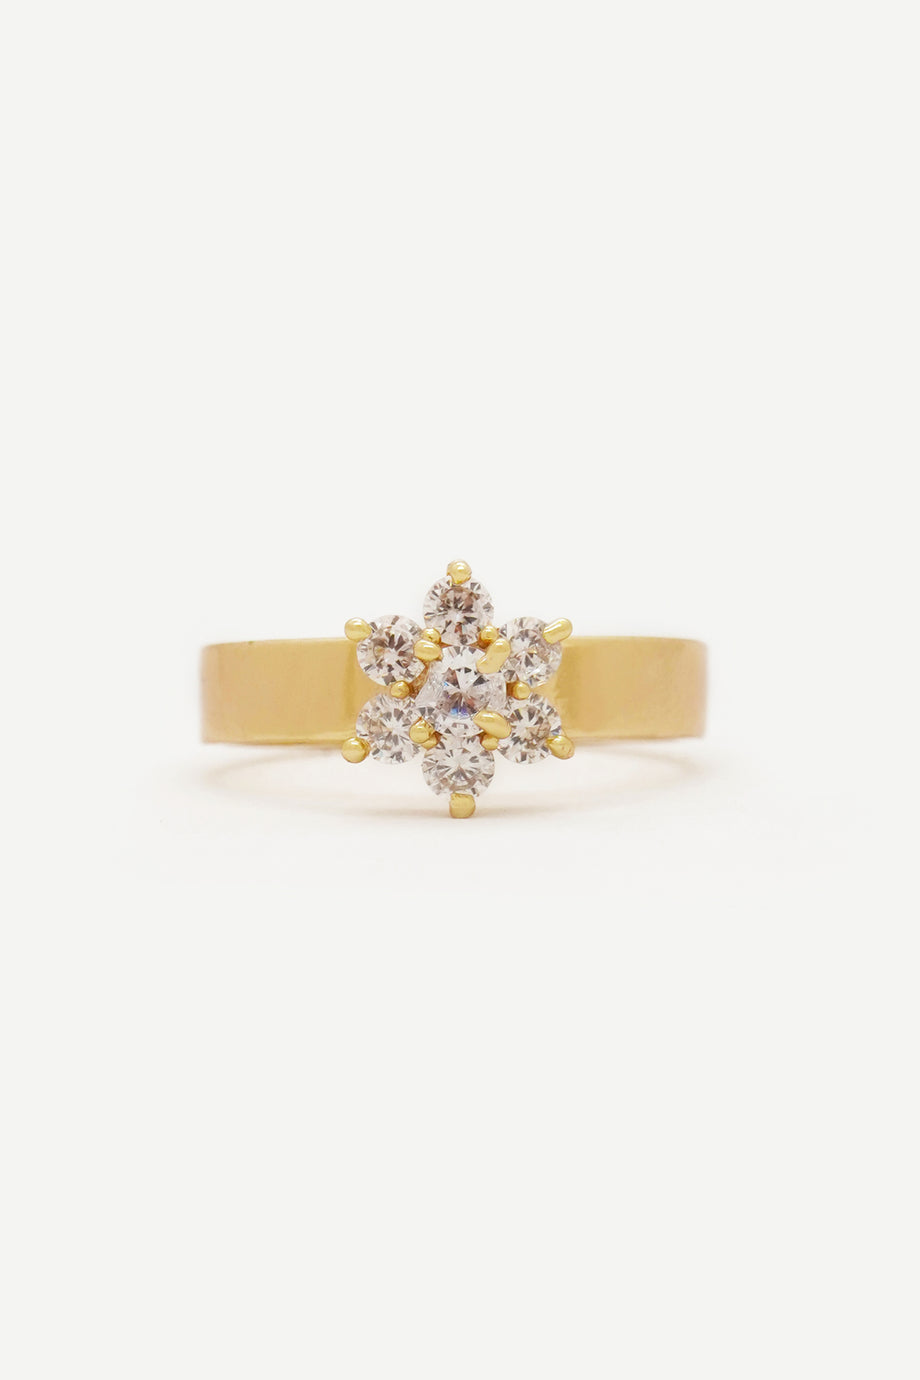 Mens Modern 14K Yellow Gold 2.0 Carat Princess White Sapphire Diamond Ring  G1094P-14KYGDWS | Art Masters Jewelry